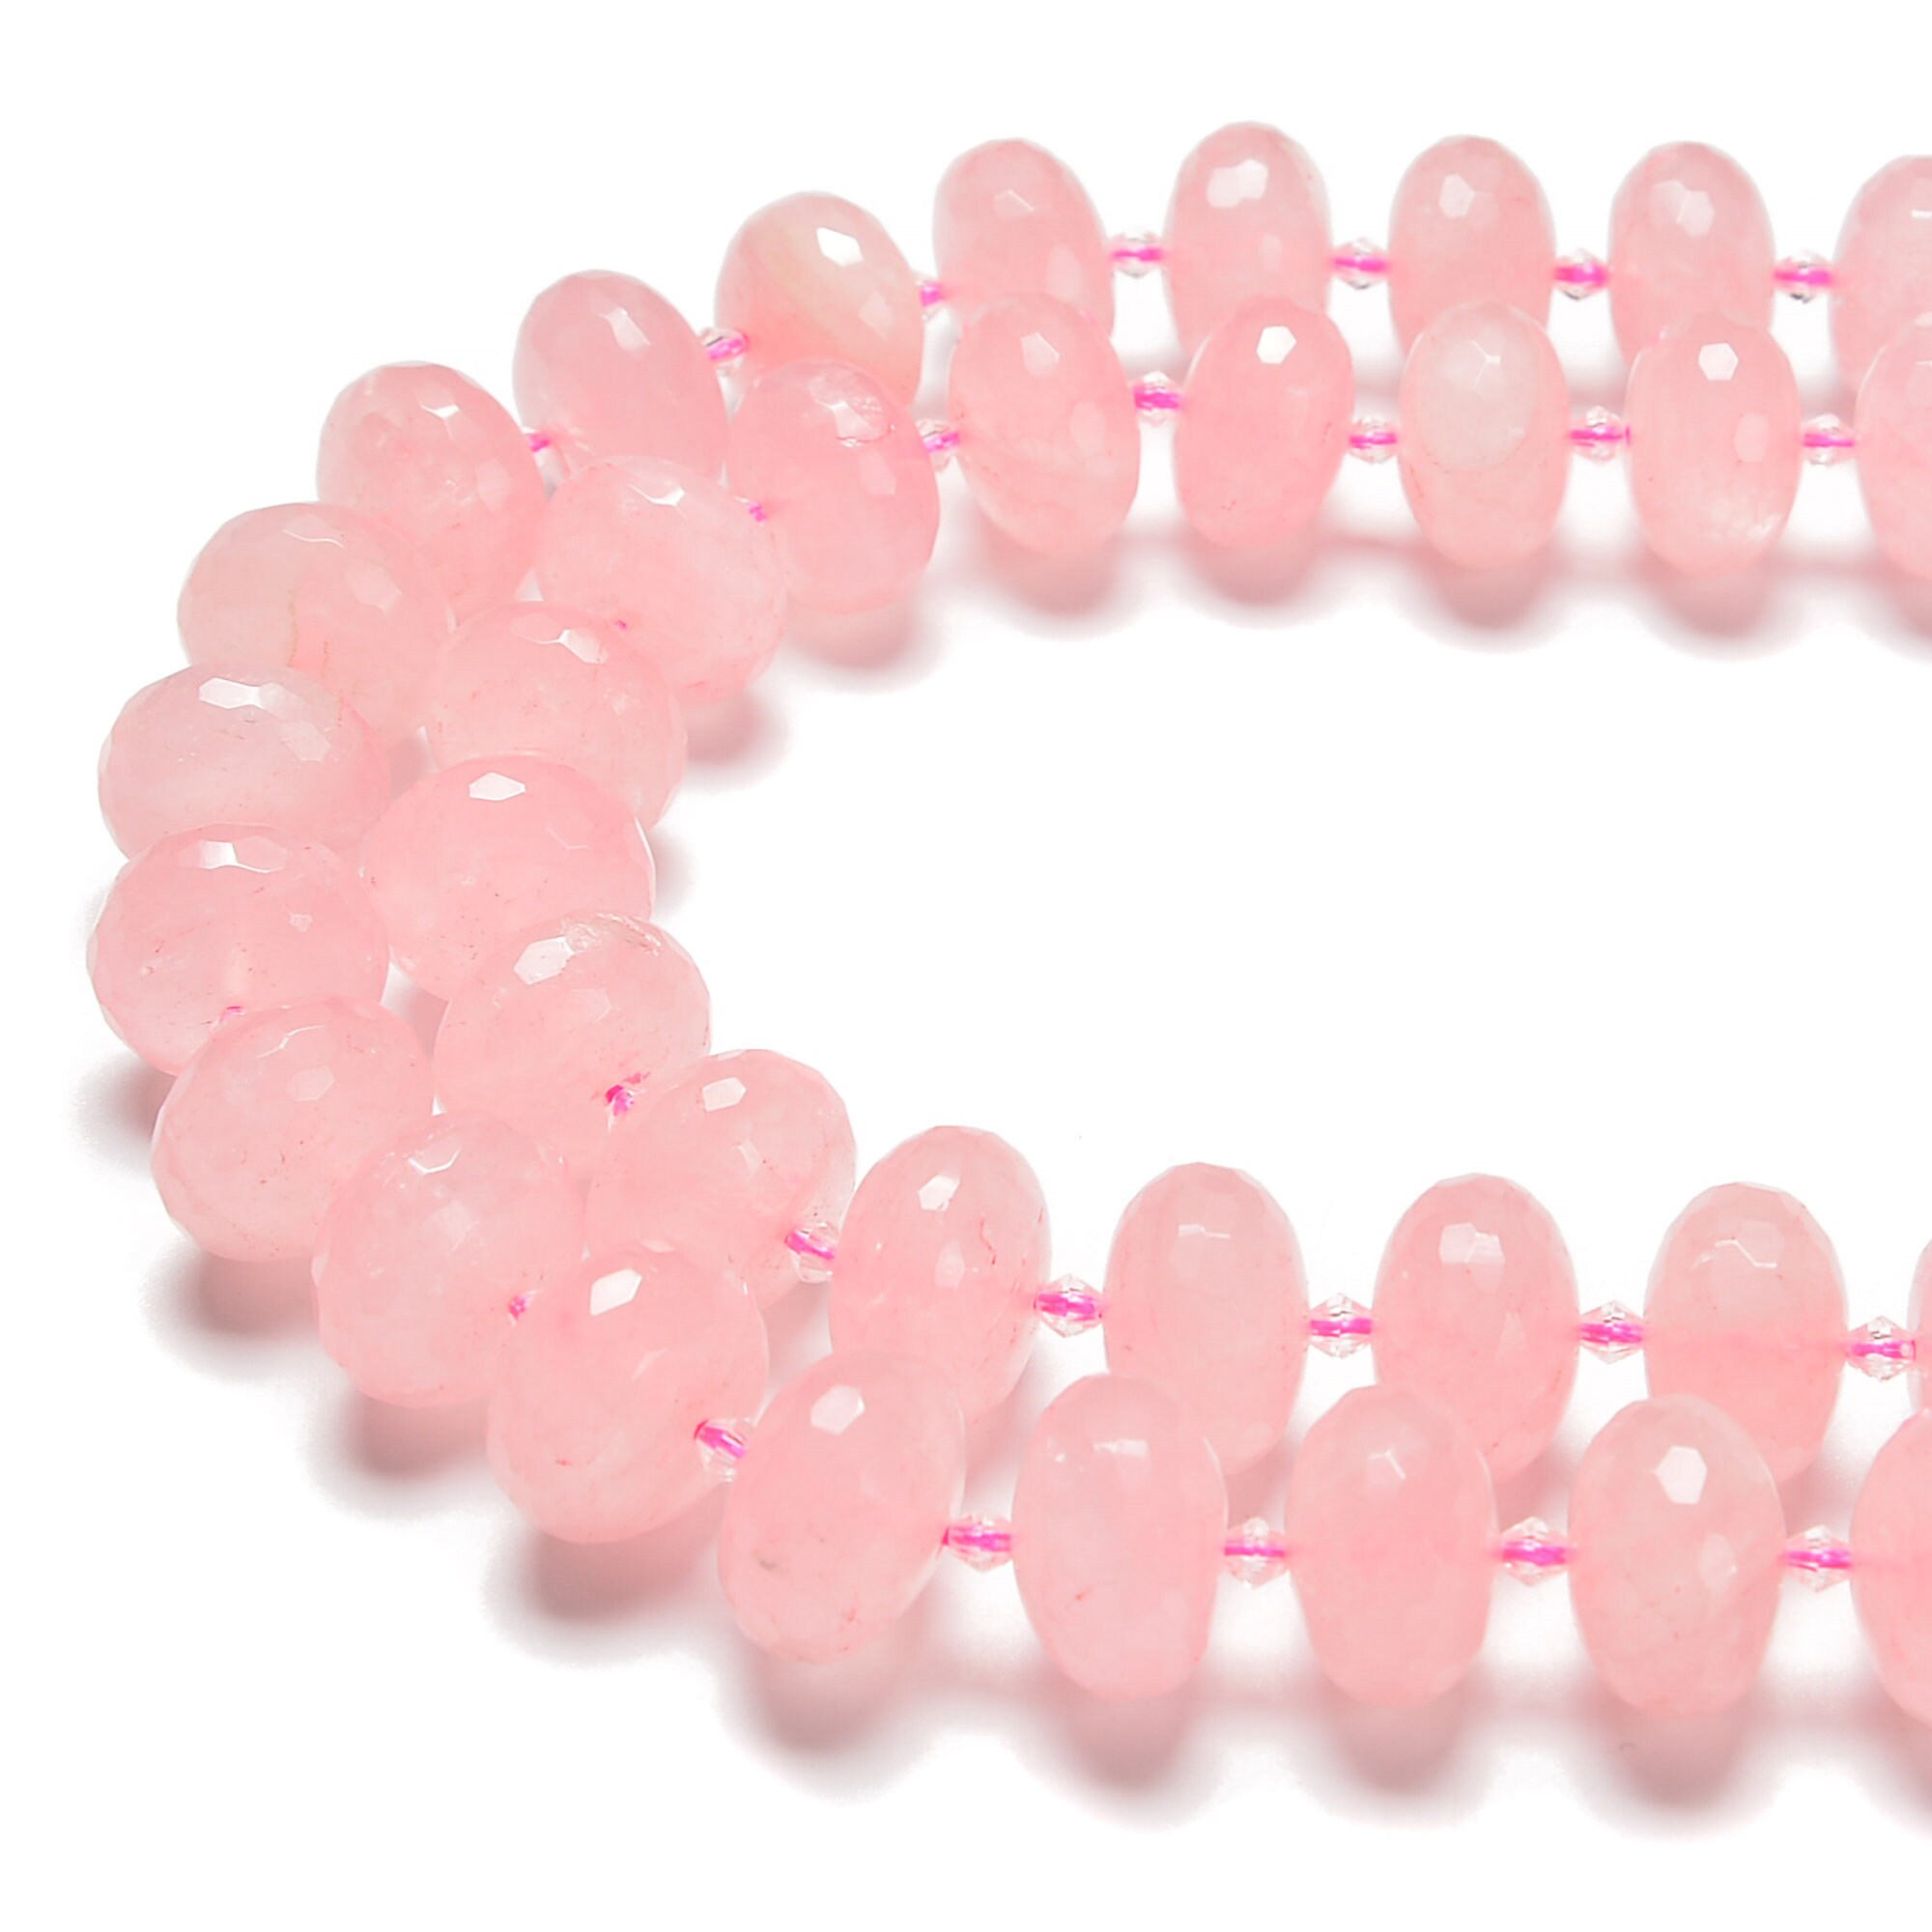 Rose Quartz 7-10mm Faceted Rondelle AA Grade Gemstone Beads Lot - 155390